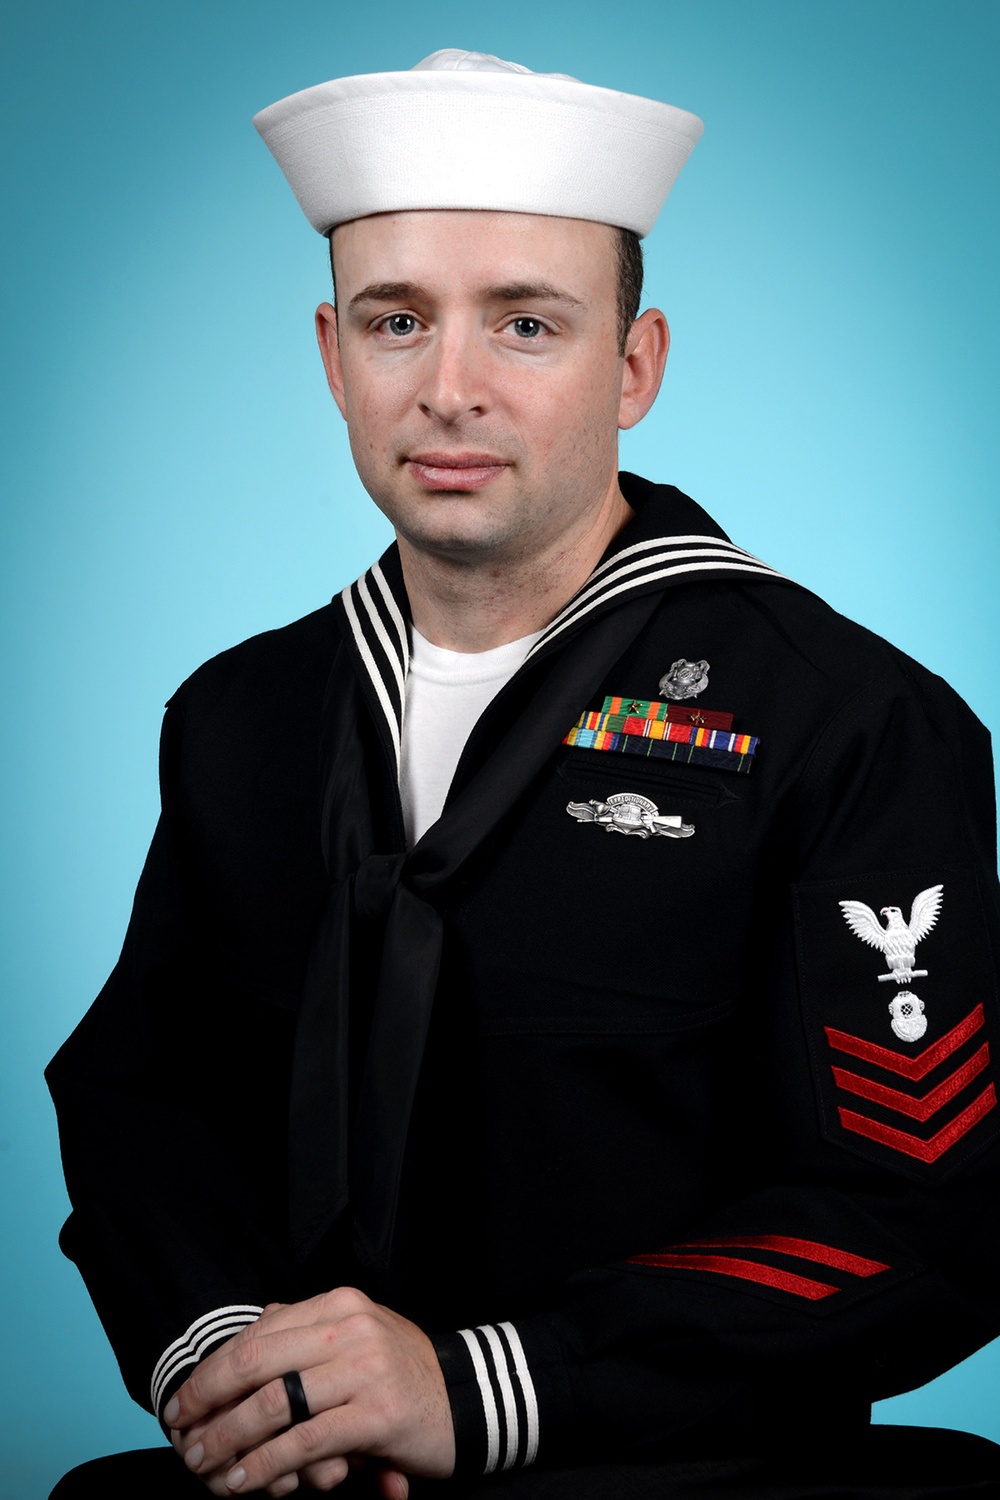 DVIDS - News - NIWC Pacific ND1 Aaron Gruber Named U.S. Navy Shore ...